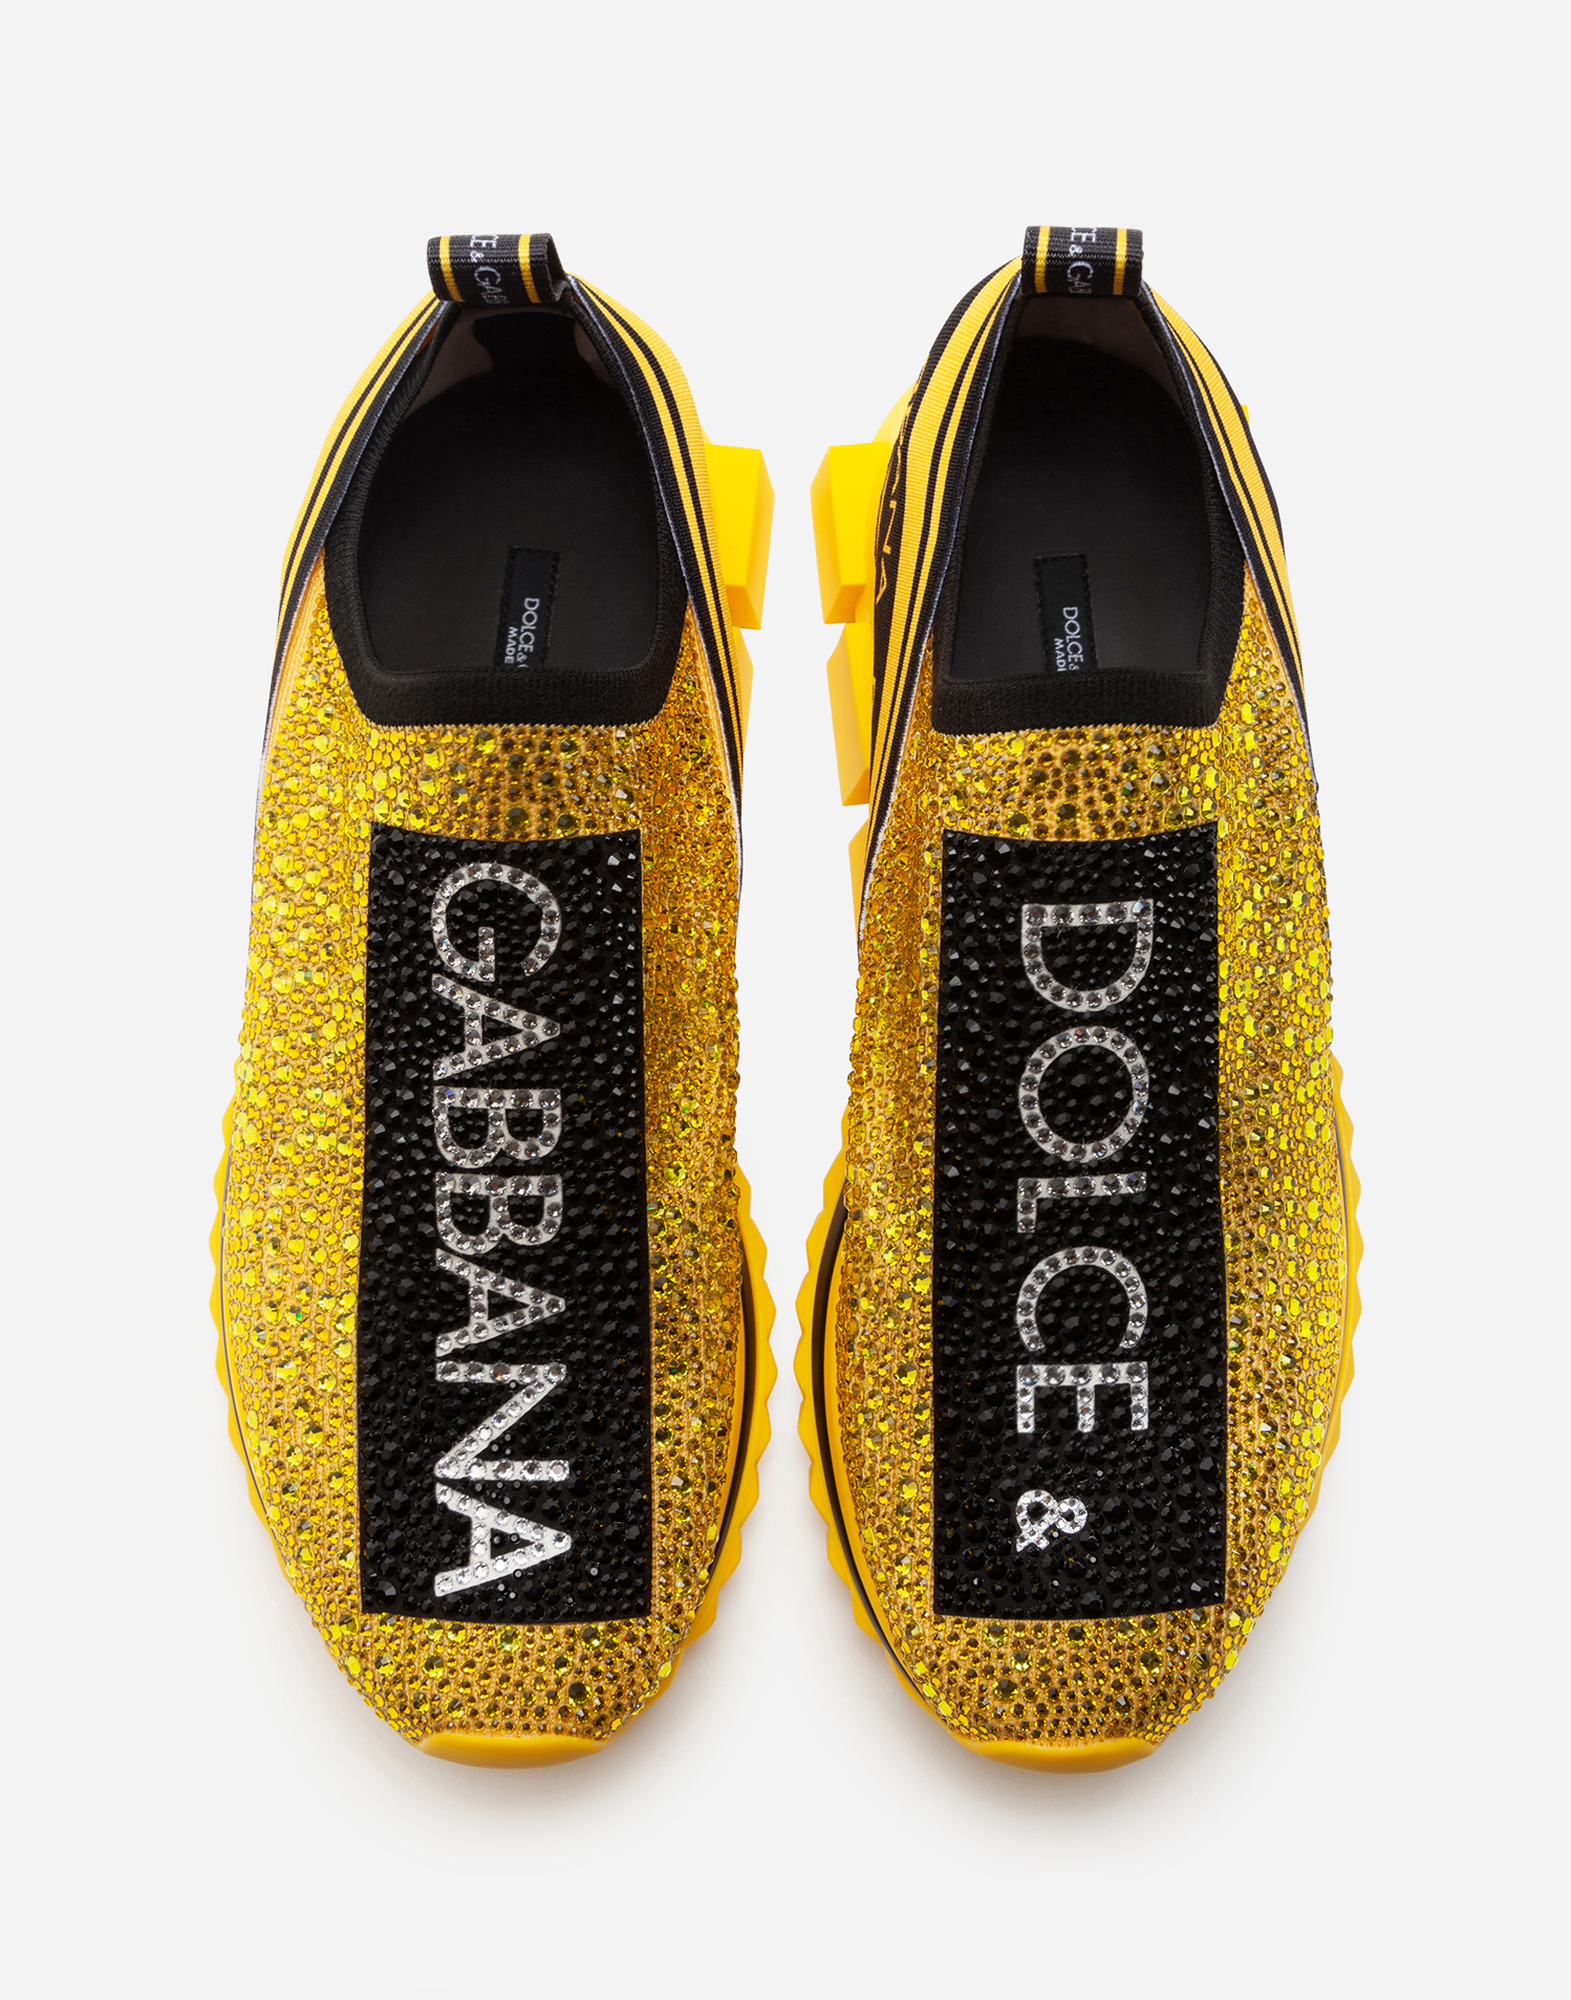 dolce gabbana sneakers yellow